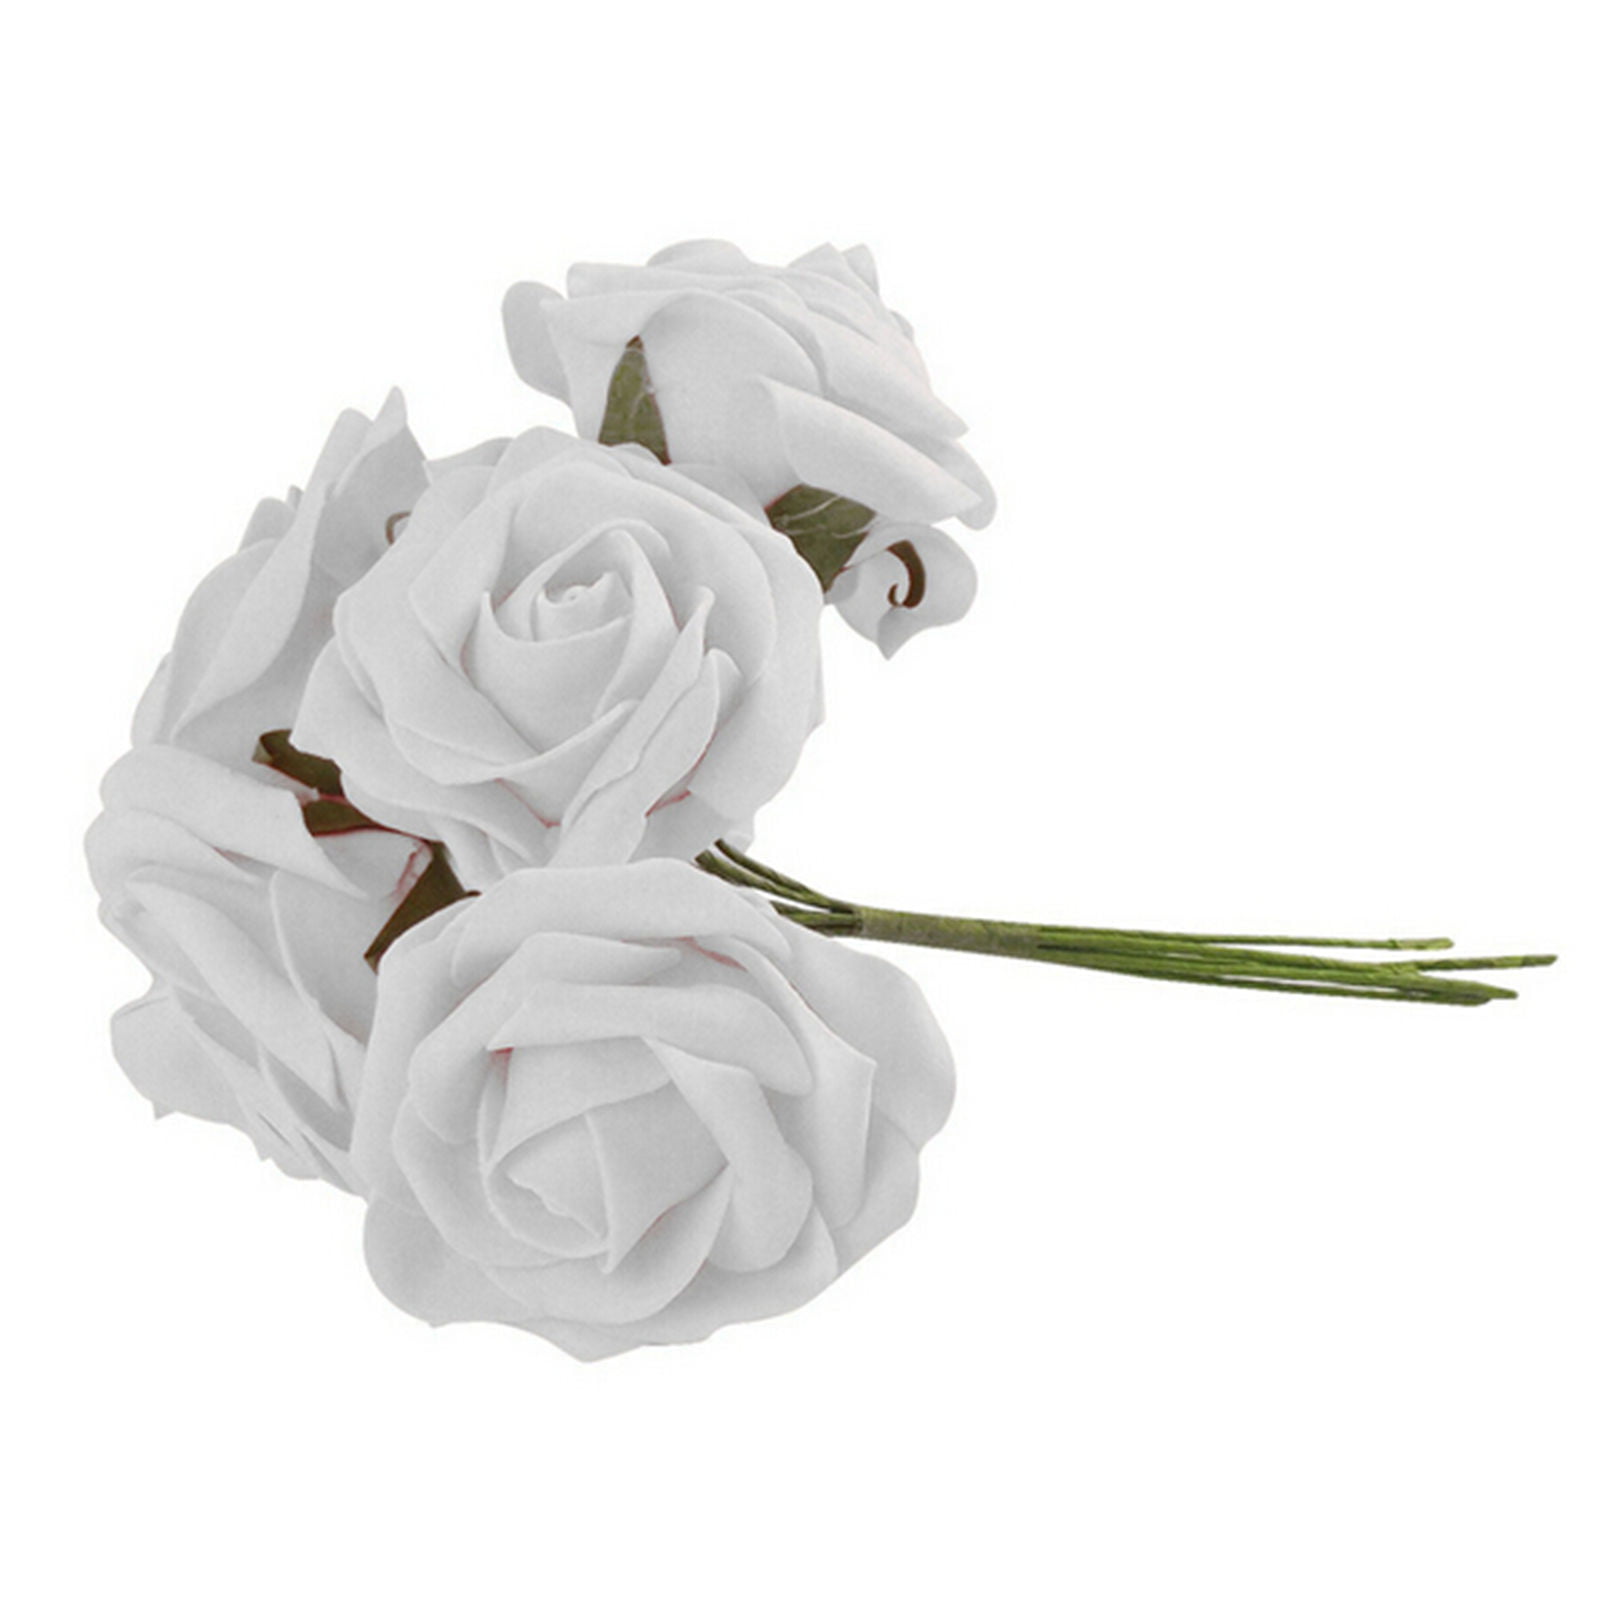 10x Artificial Fake White Flowers Foam Rose Bride Bouquet Party Wedding Decor US 